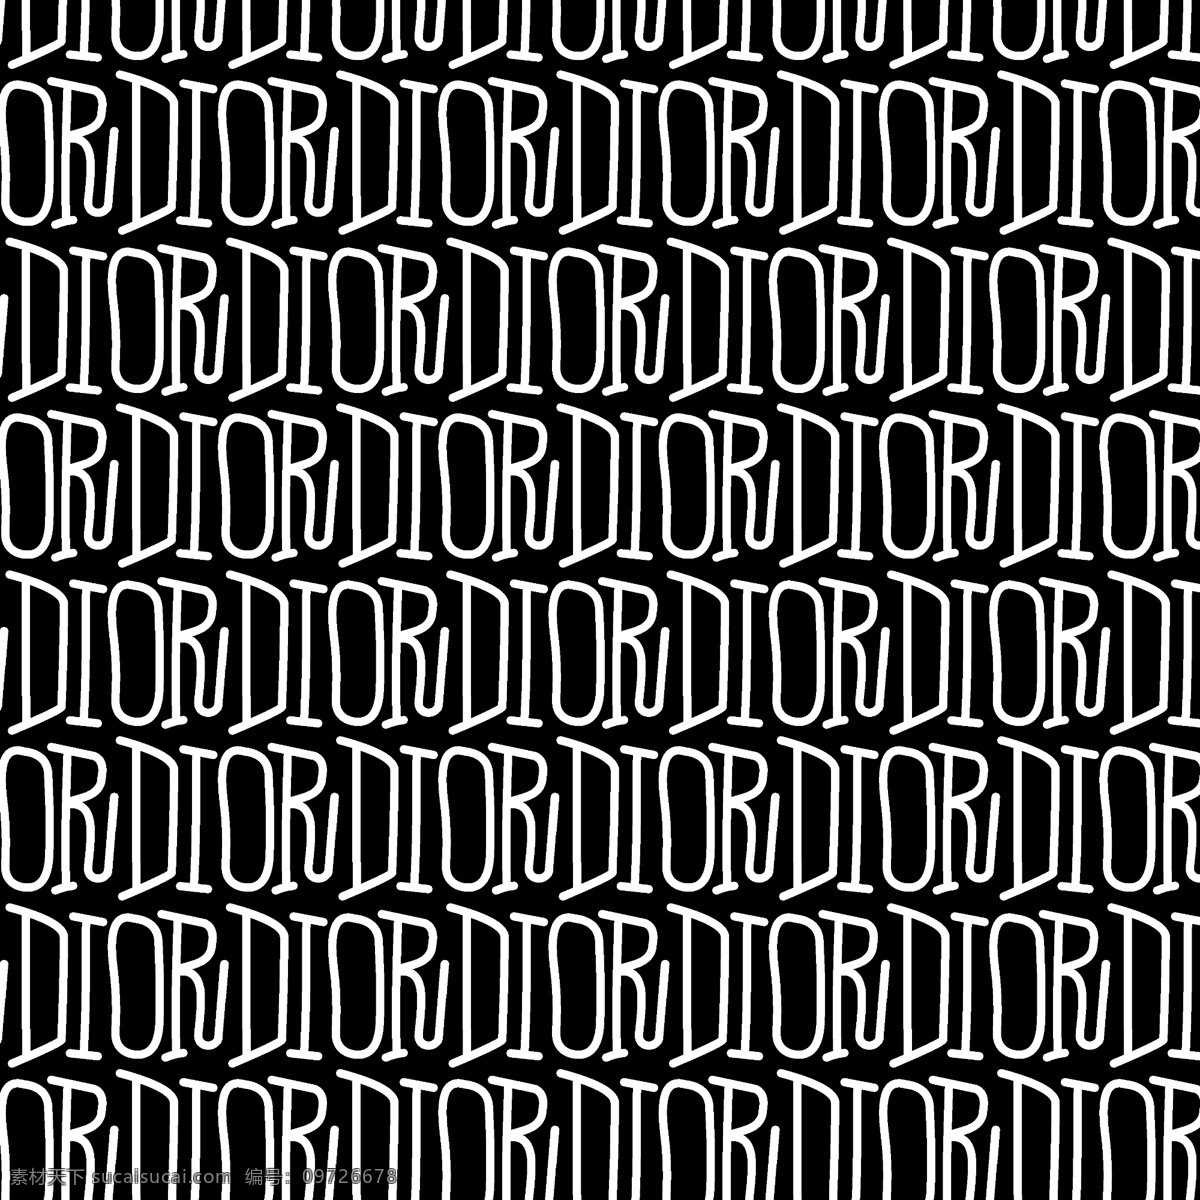 dior 迪奥图片 大牌 字母 dior底纹 花纹 服装 四方连续 数码印花 字母卡通